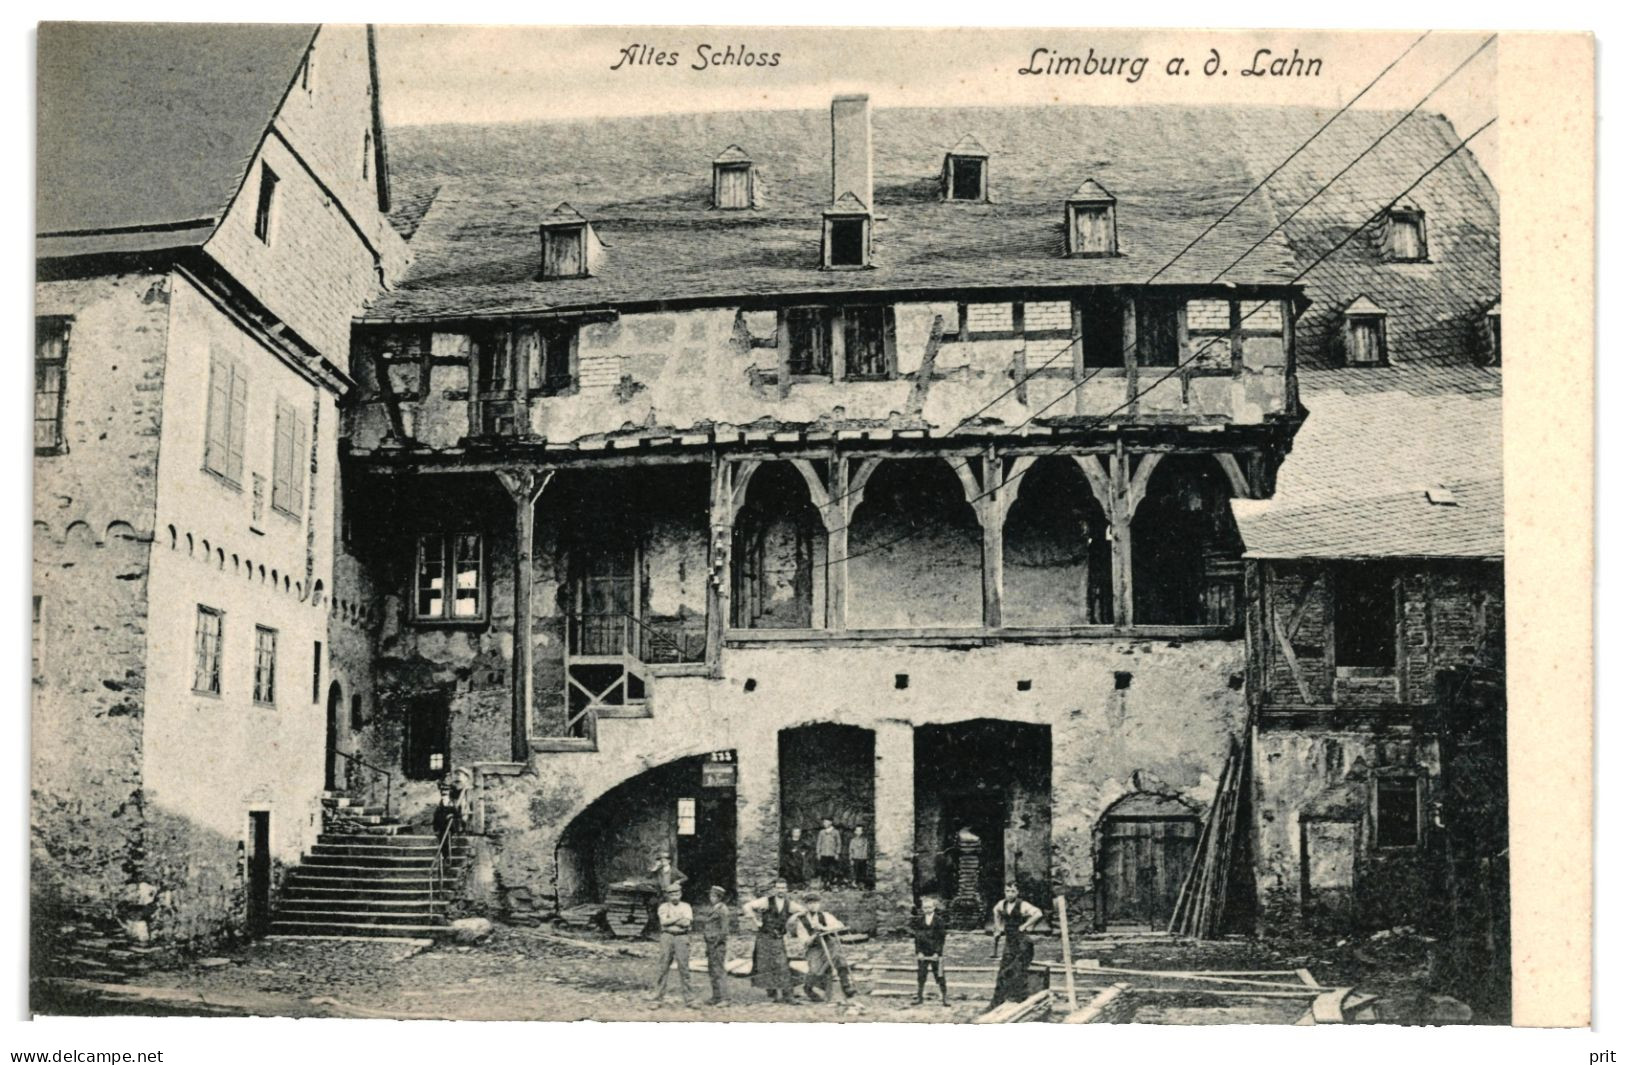 Limburg A. D. Lahn, Altes Schloss 1903 Unused Real Photo Postcard. Publisher Ludwig Feist, Mainz - Limburg